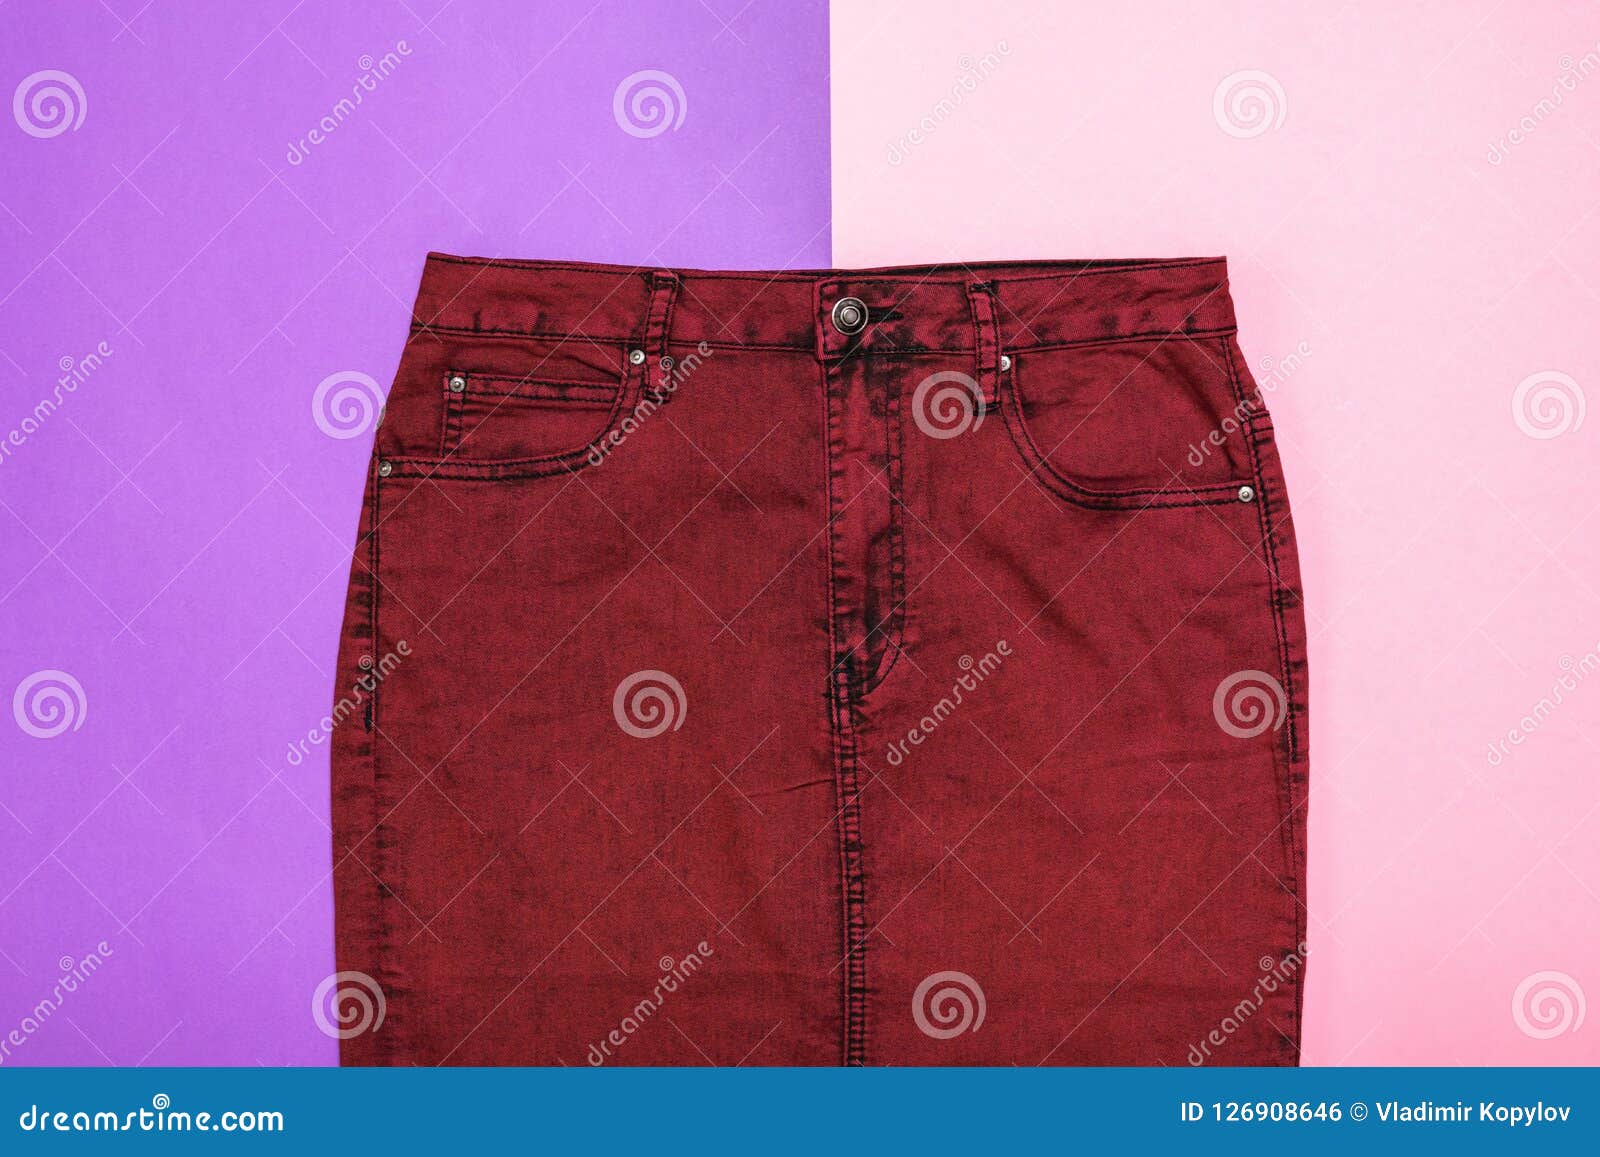 Burgundy Denim Skirt on Two Colors Background. Stylish Women`s Denim ...